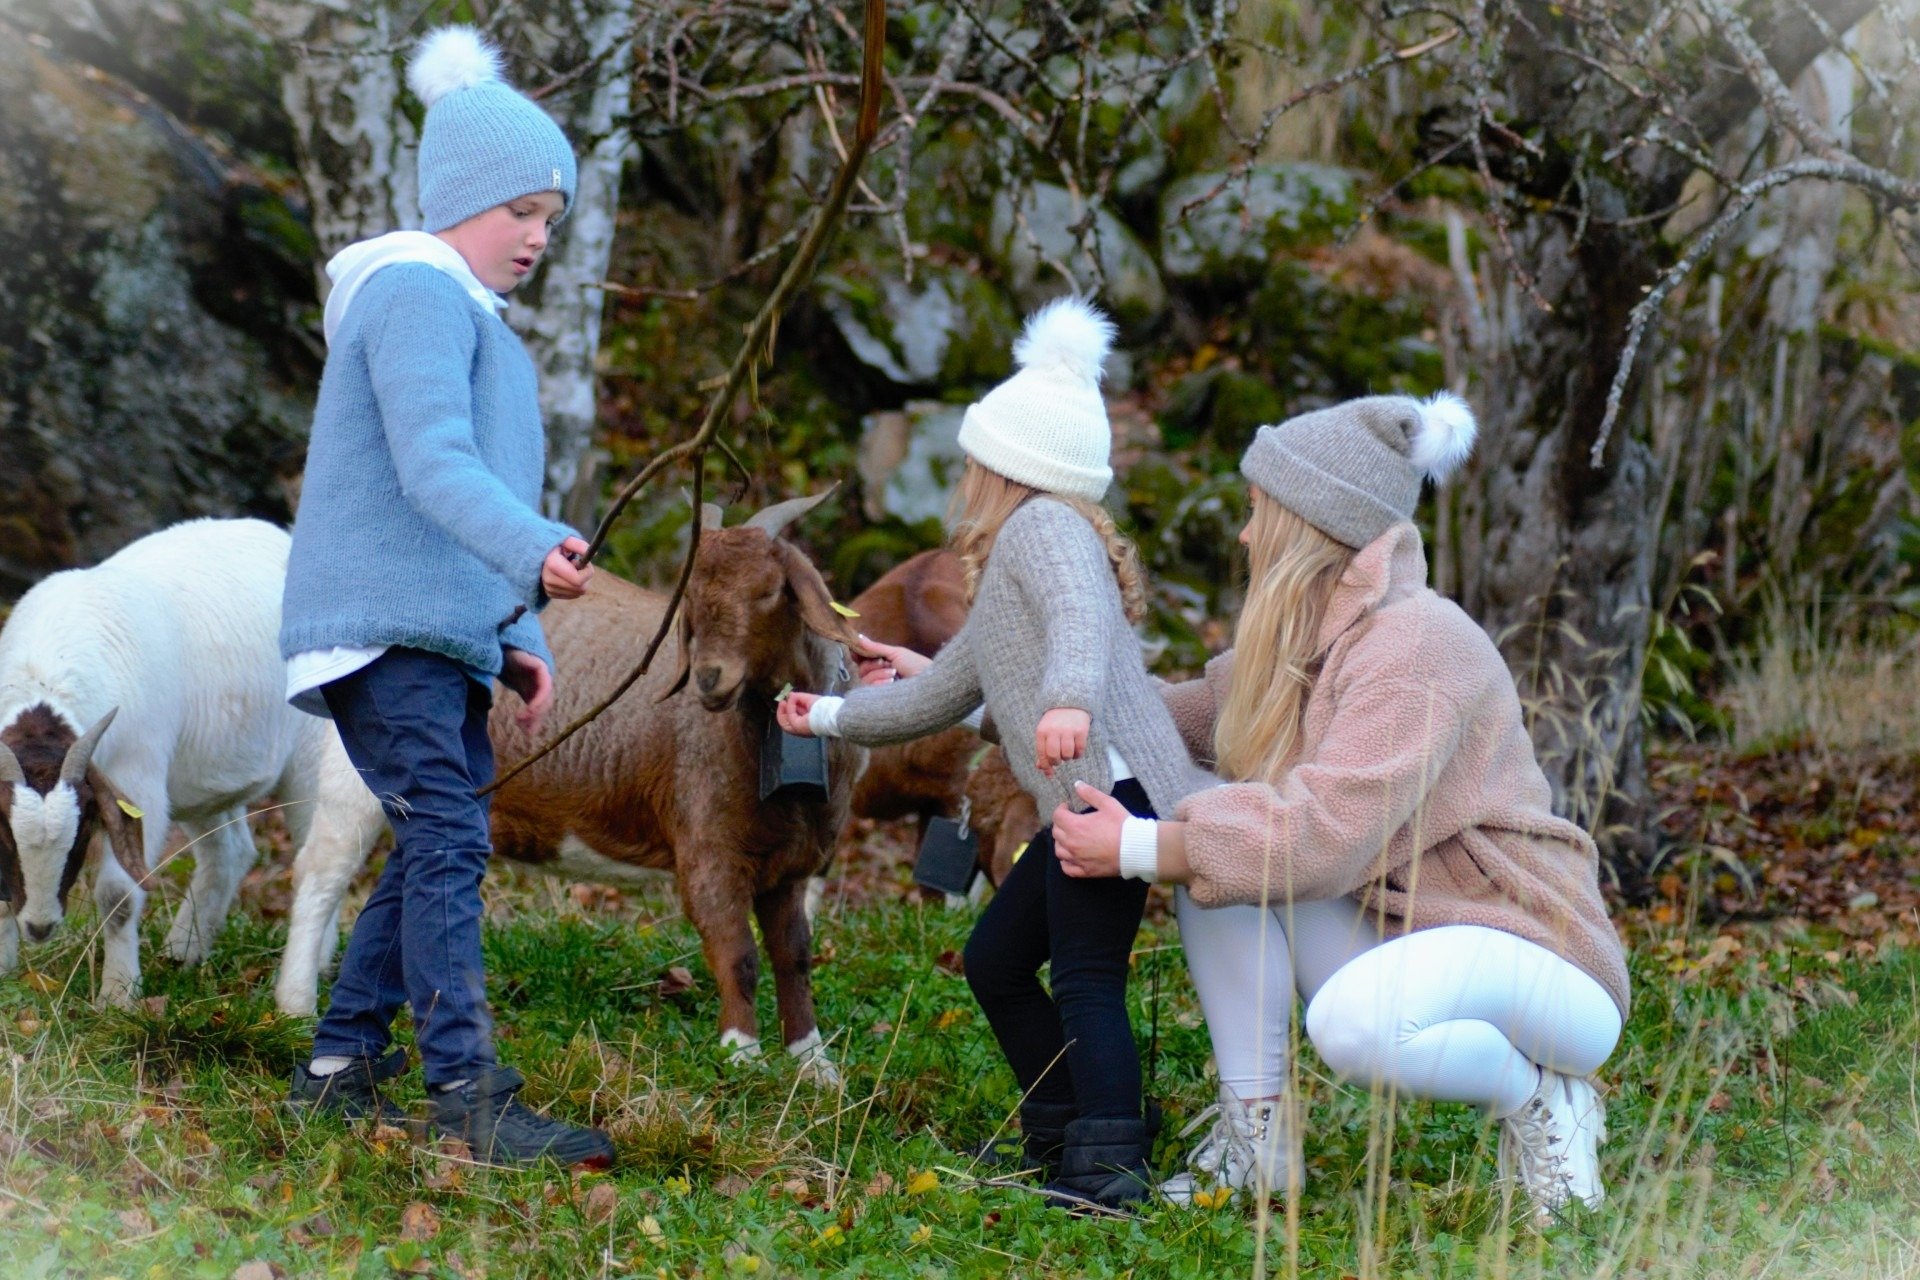 Boer goats love company and fun